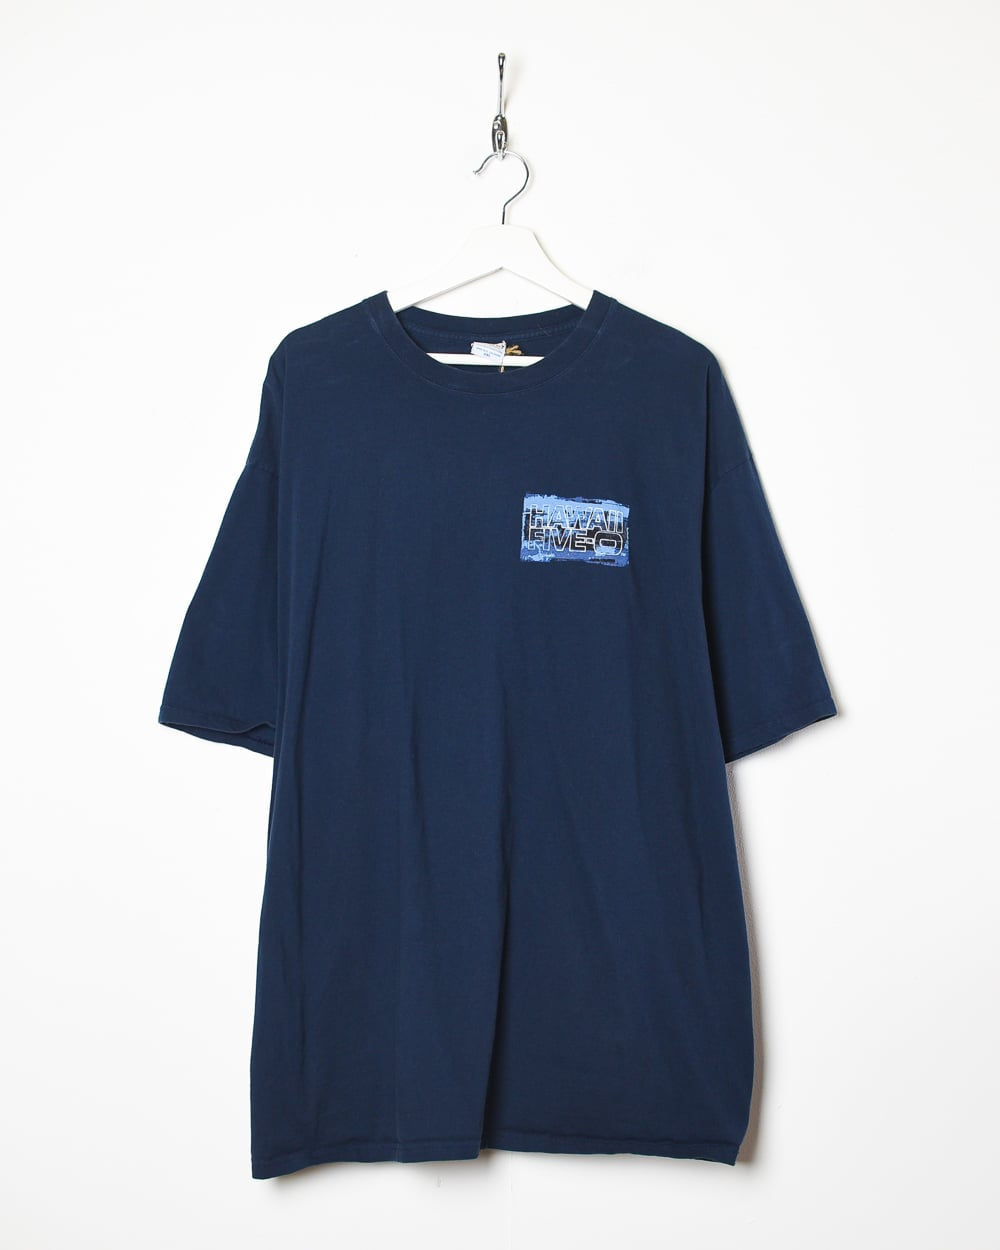 Navy Hawaii Five-O T-Shirt - XX-Large